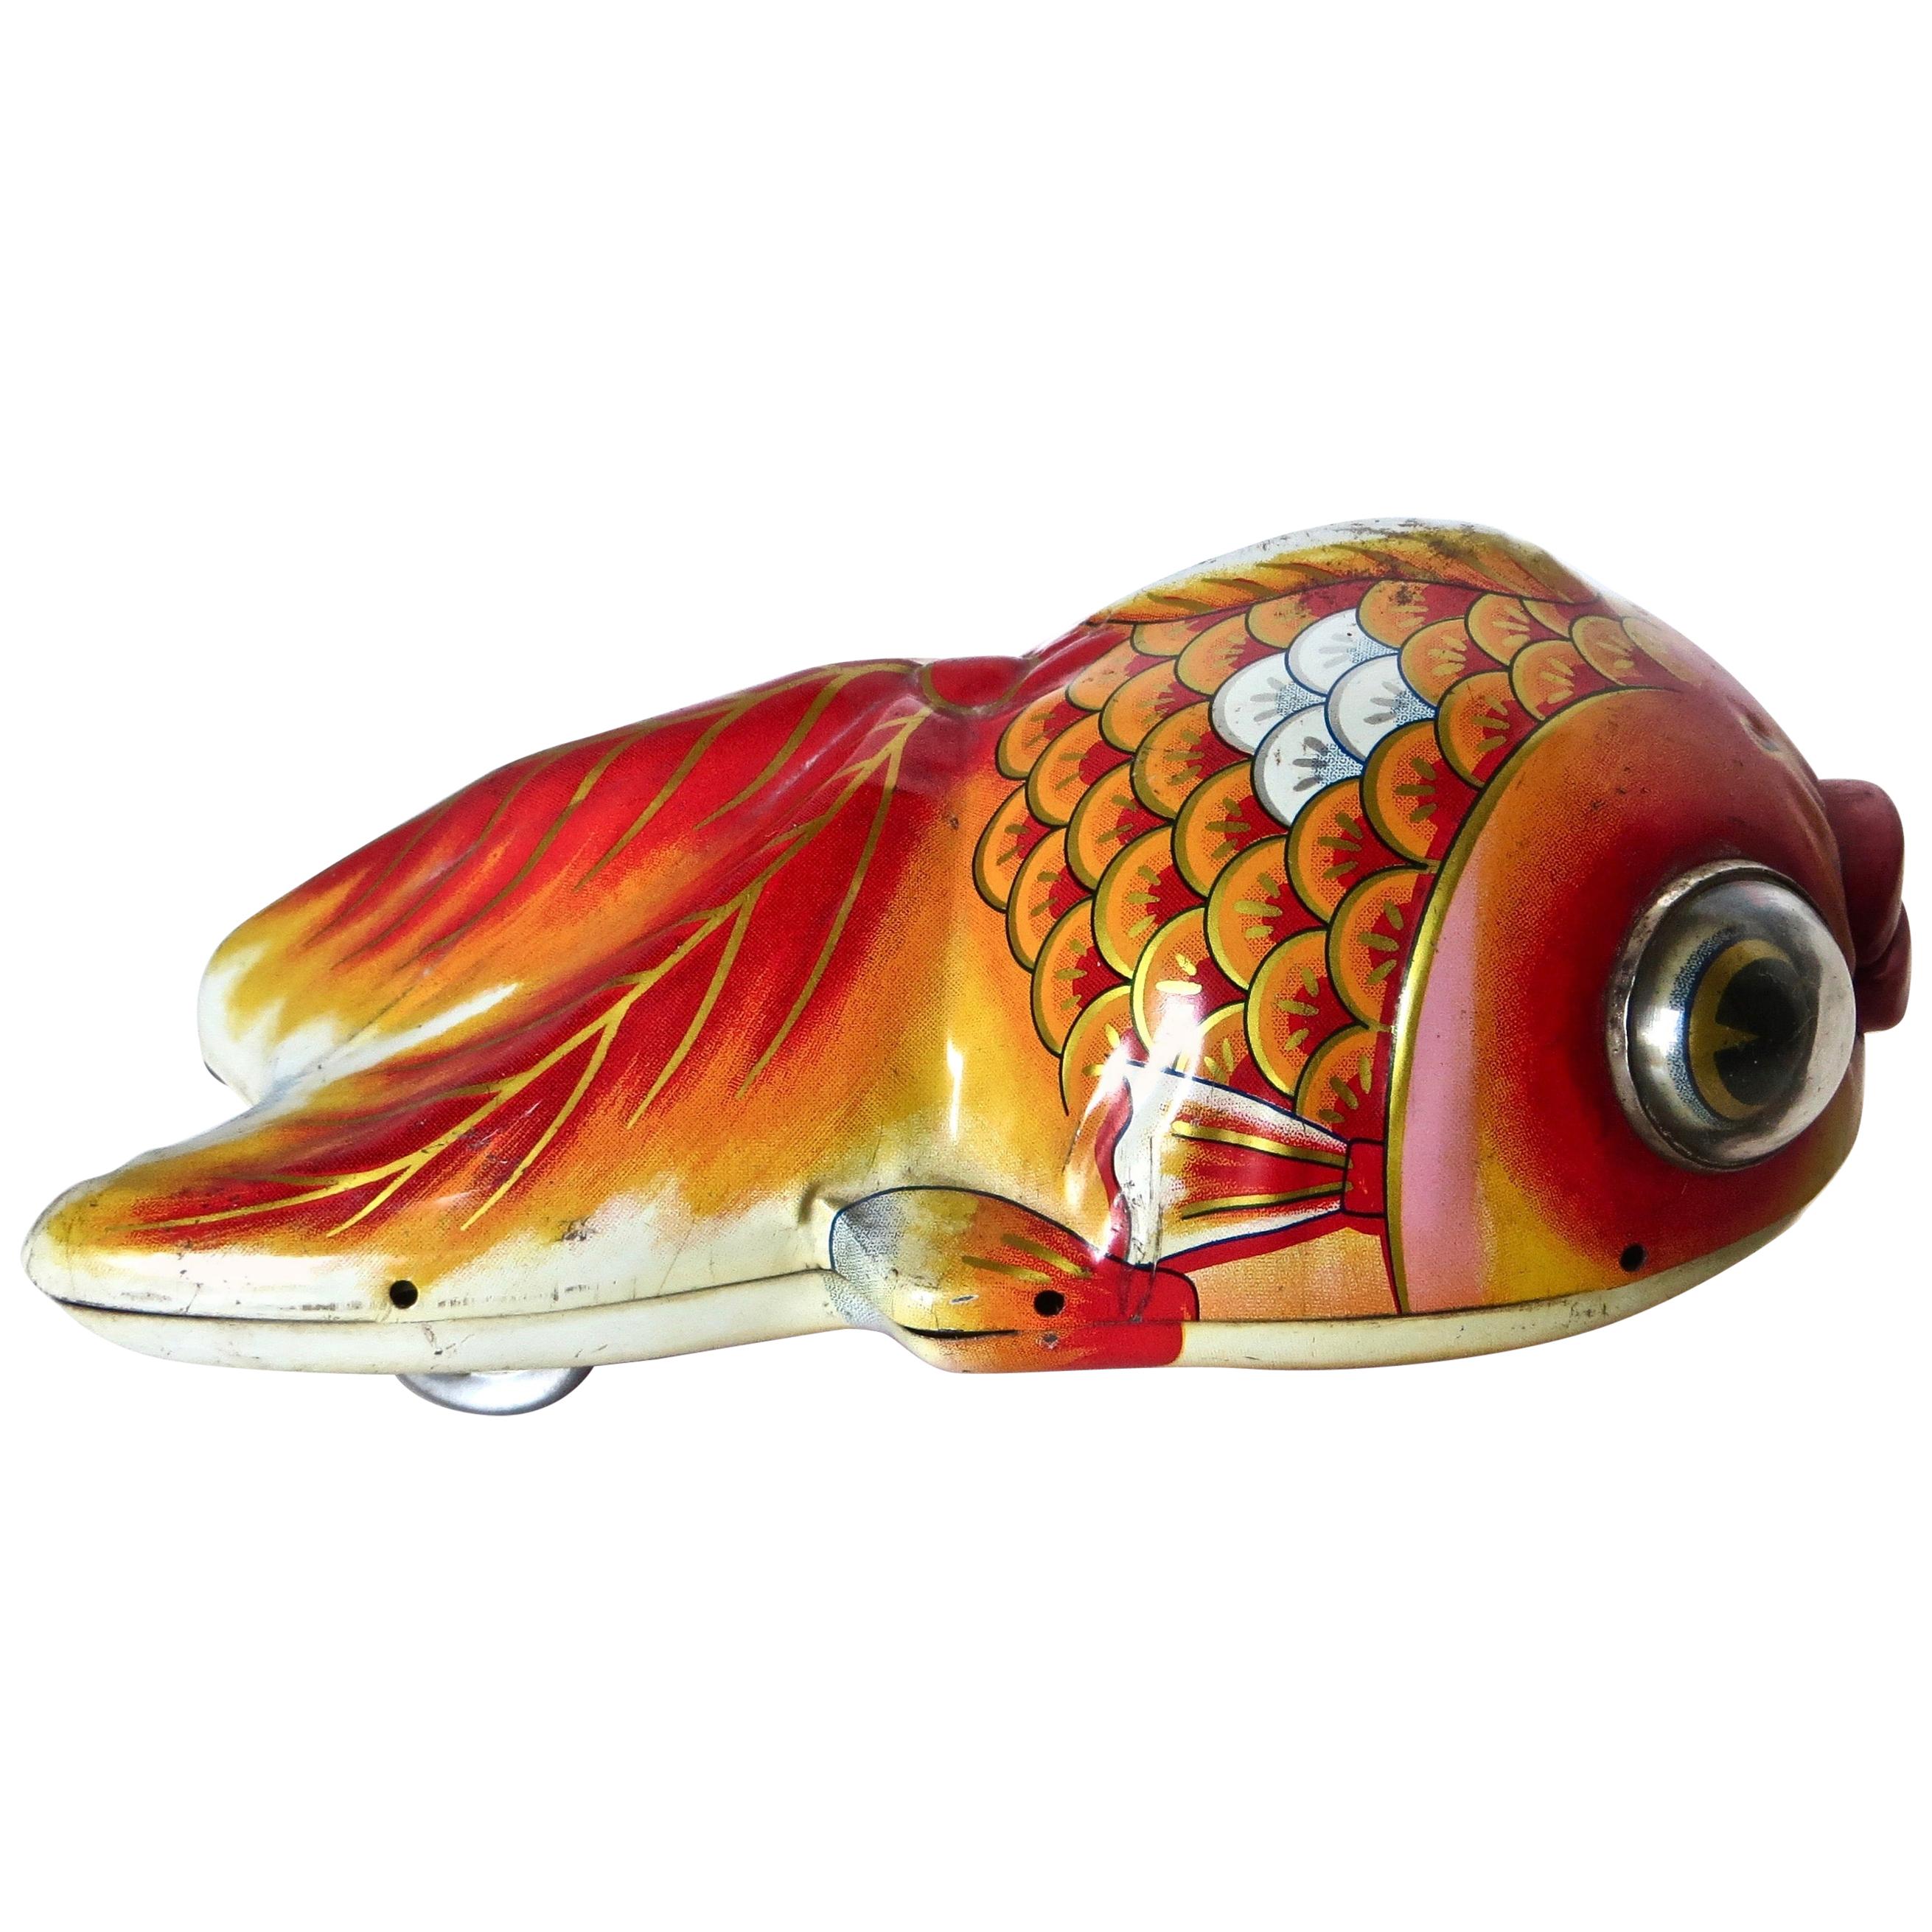 Vintage "Googly Eyed" Goldfish Japanese Windup Toy, circa 1950s